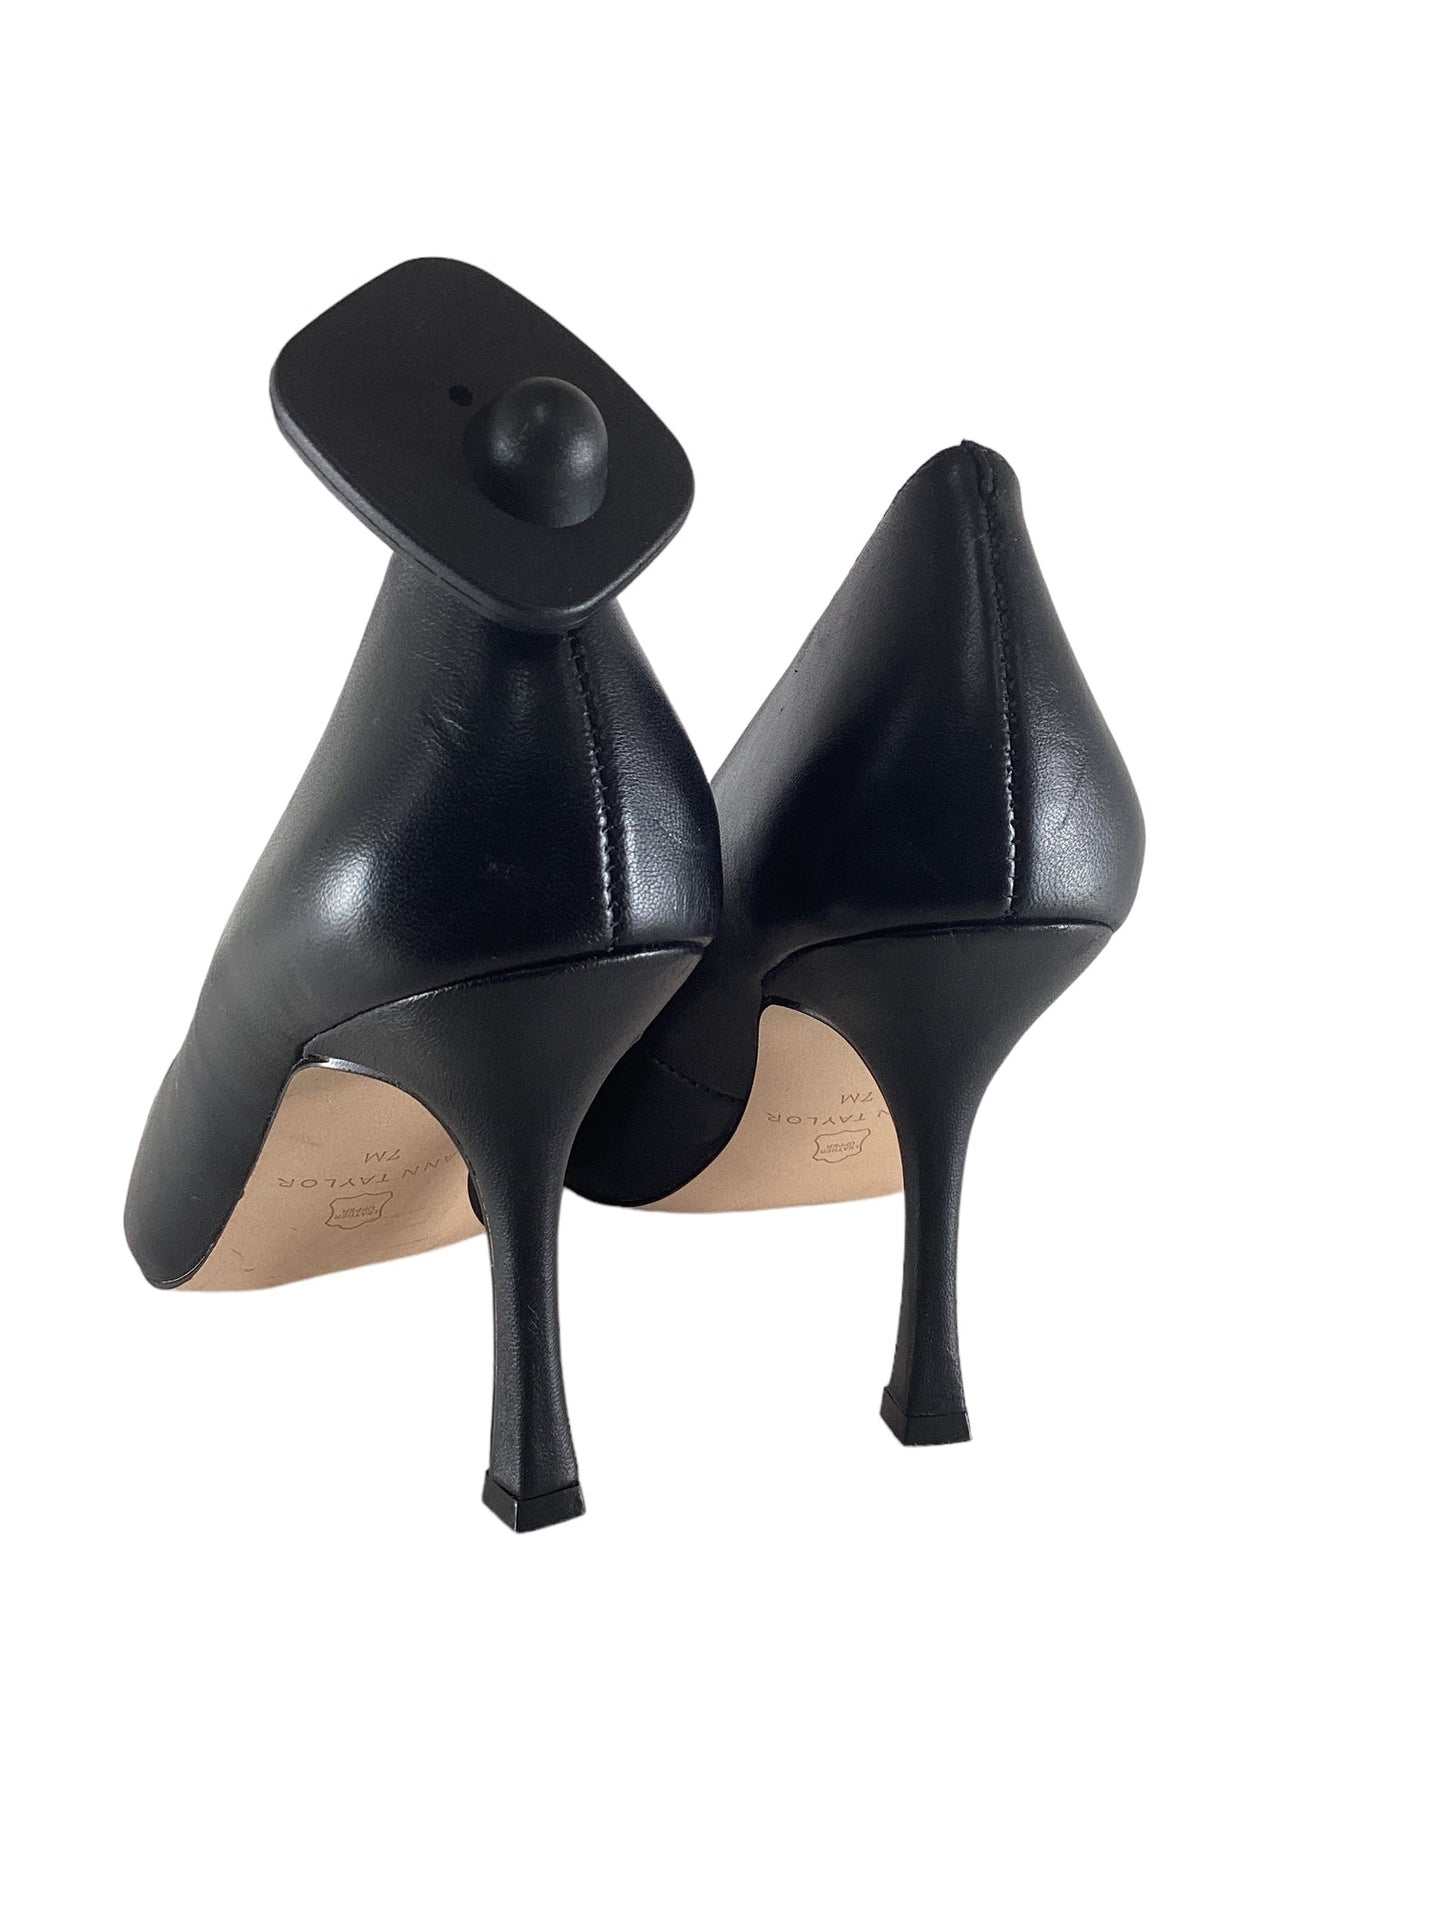 Black Shoes Heels Stiletto Ann Taylor, Size 7